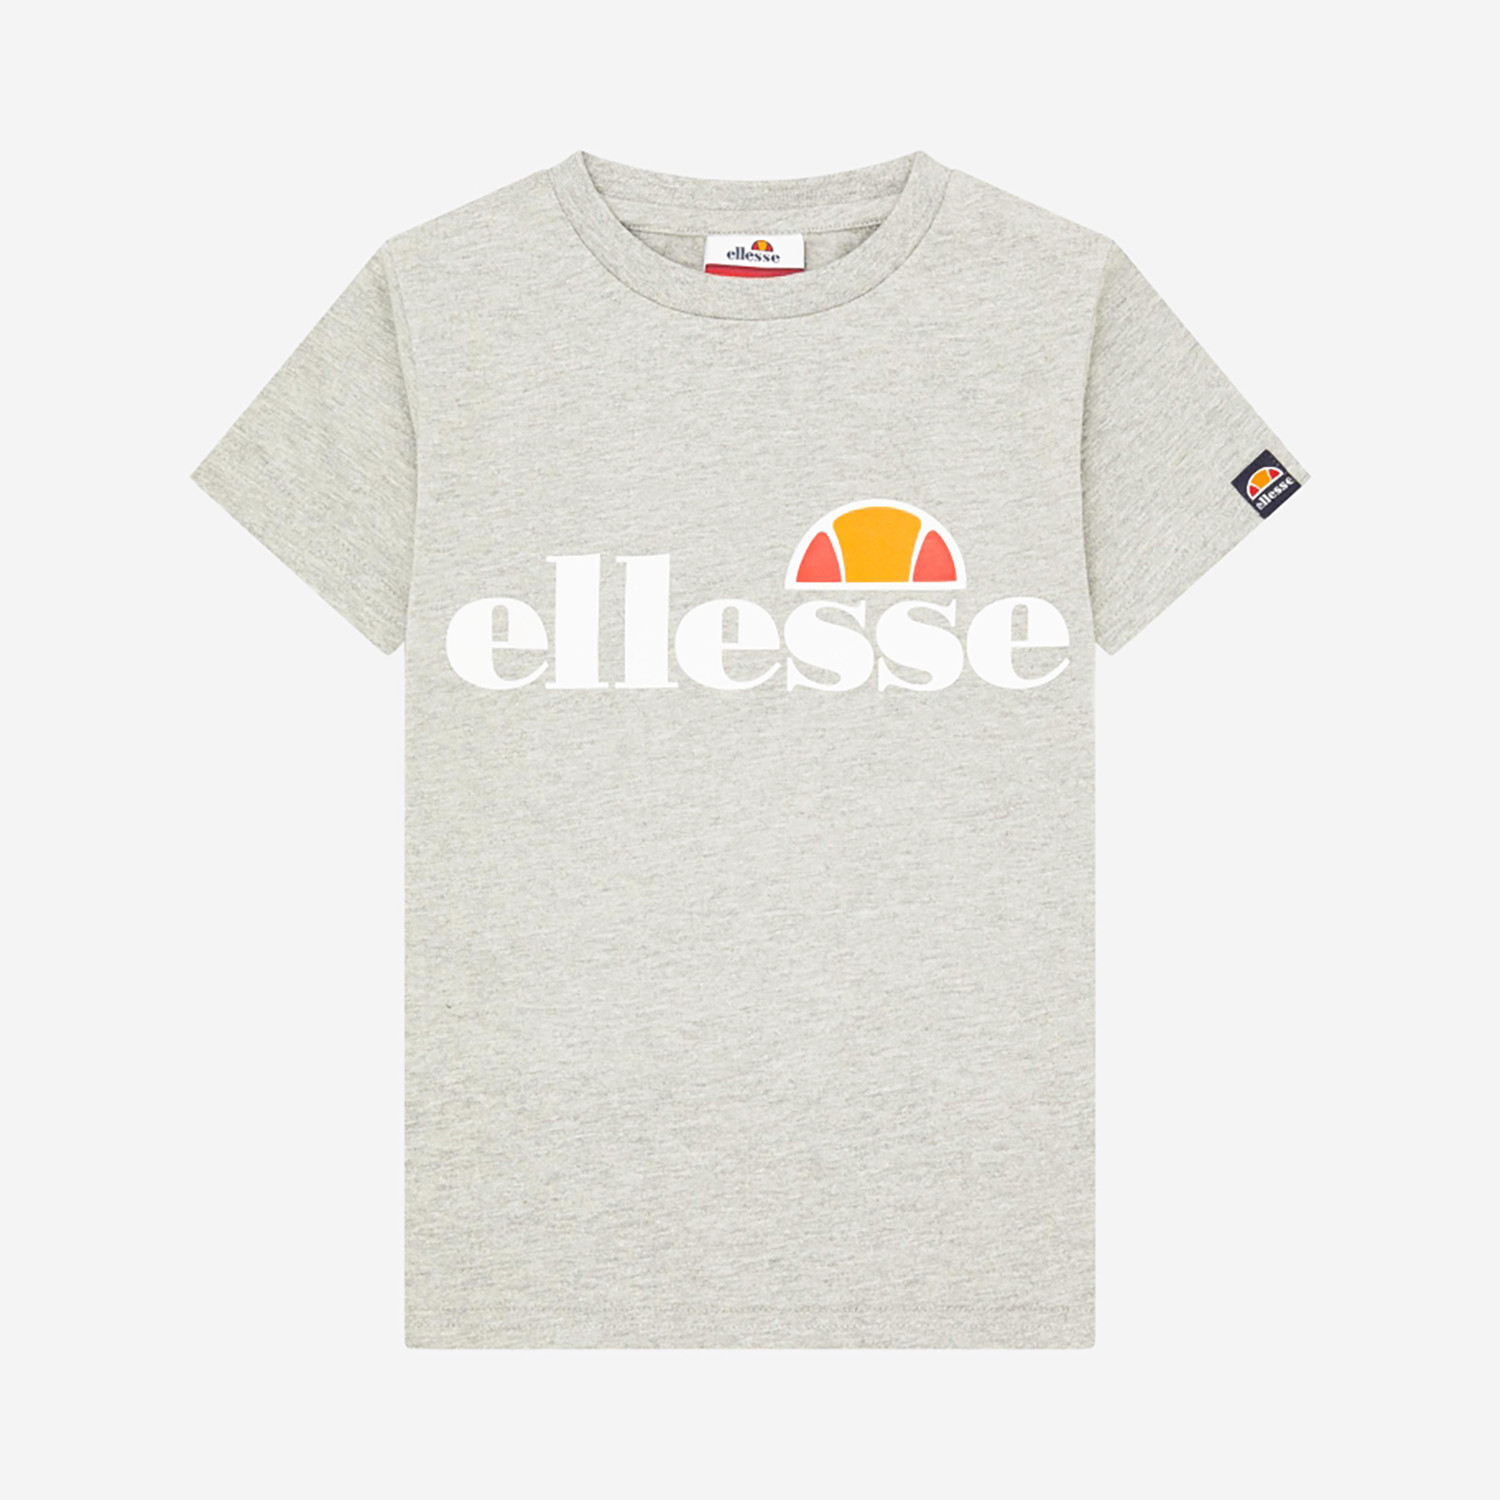 Ellesse Jena Για Μεγάλα Παιδιά T-shirt (9000076285_6216)